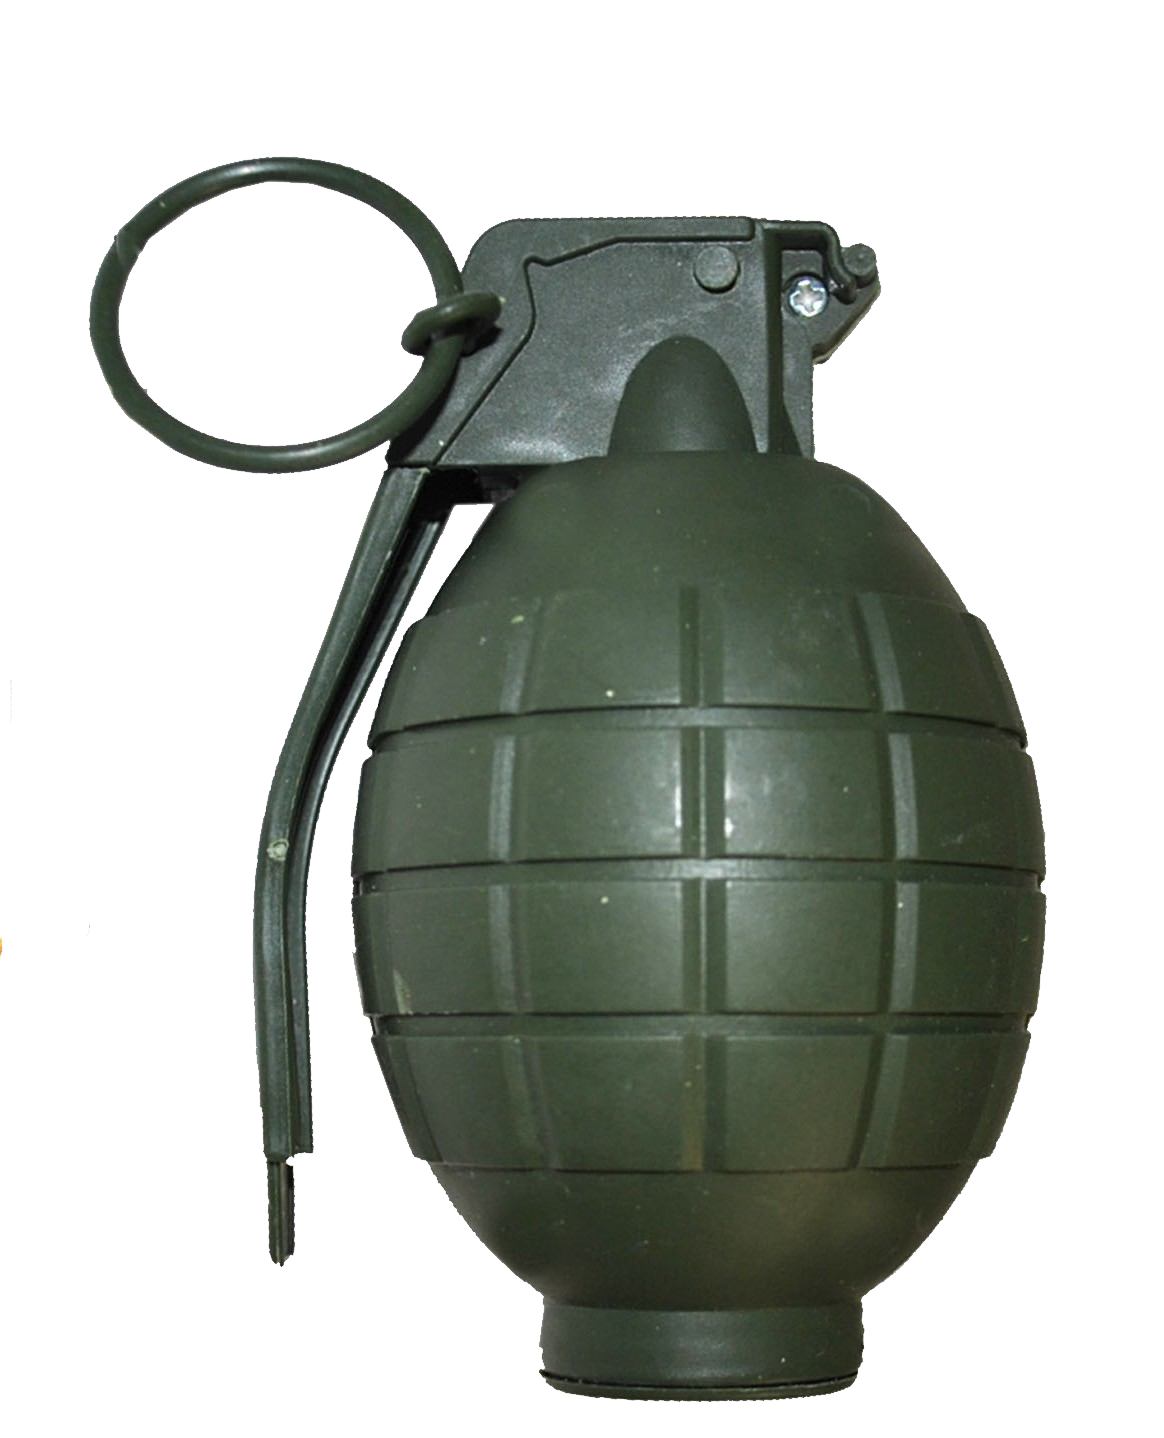 Grenade PNG - 455